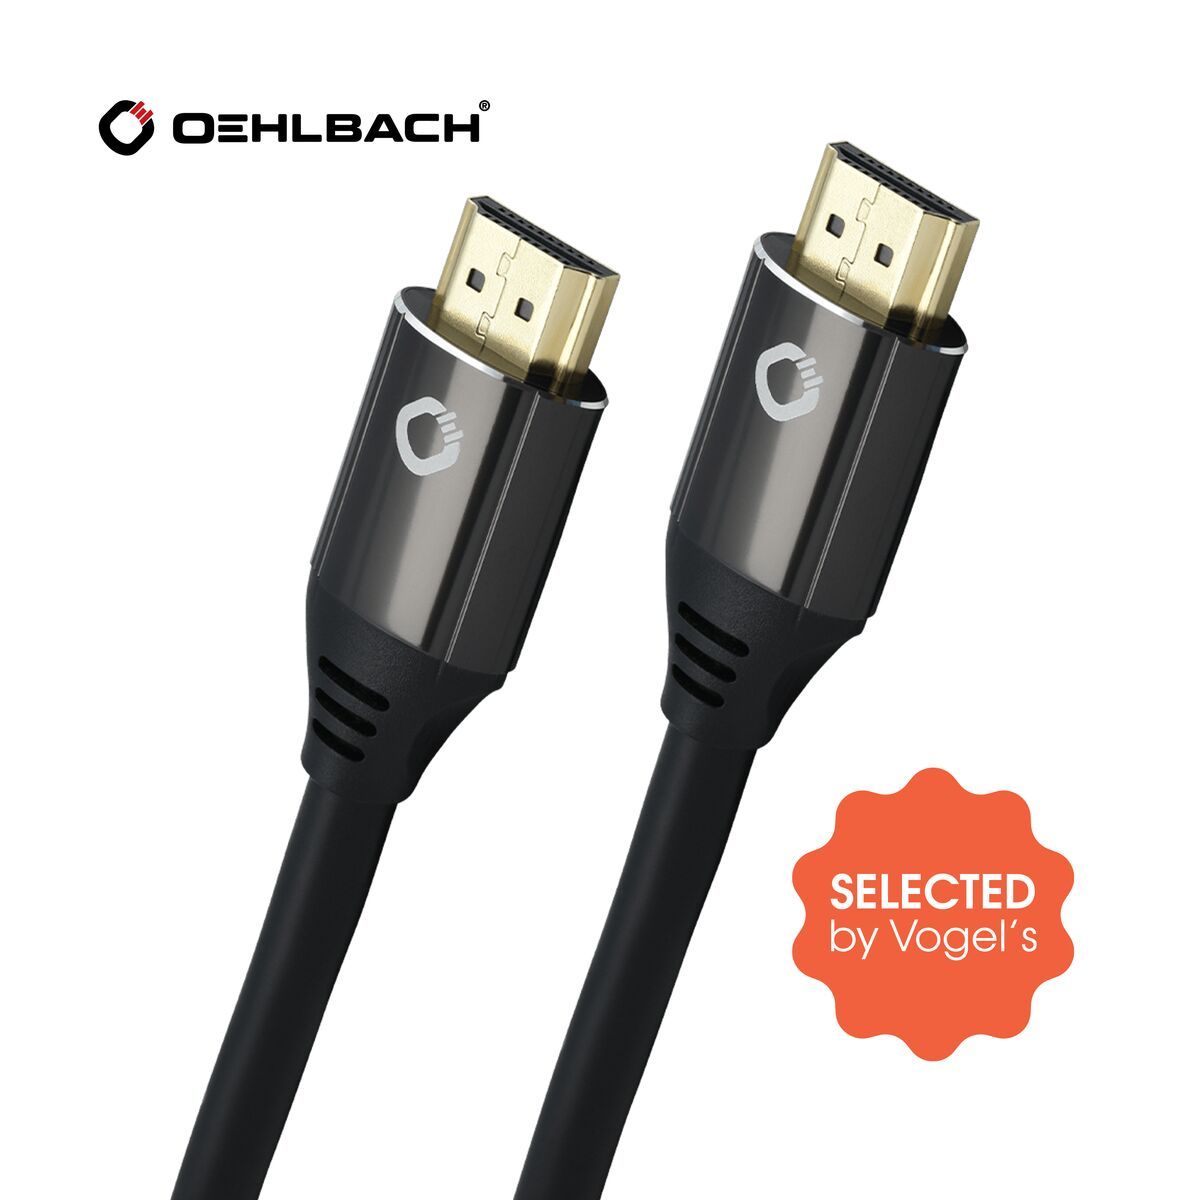 Vogel's Oehlbach Black Magic HDMI® Kabel (3 Meter) Schwarz Promo